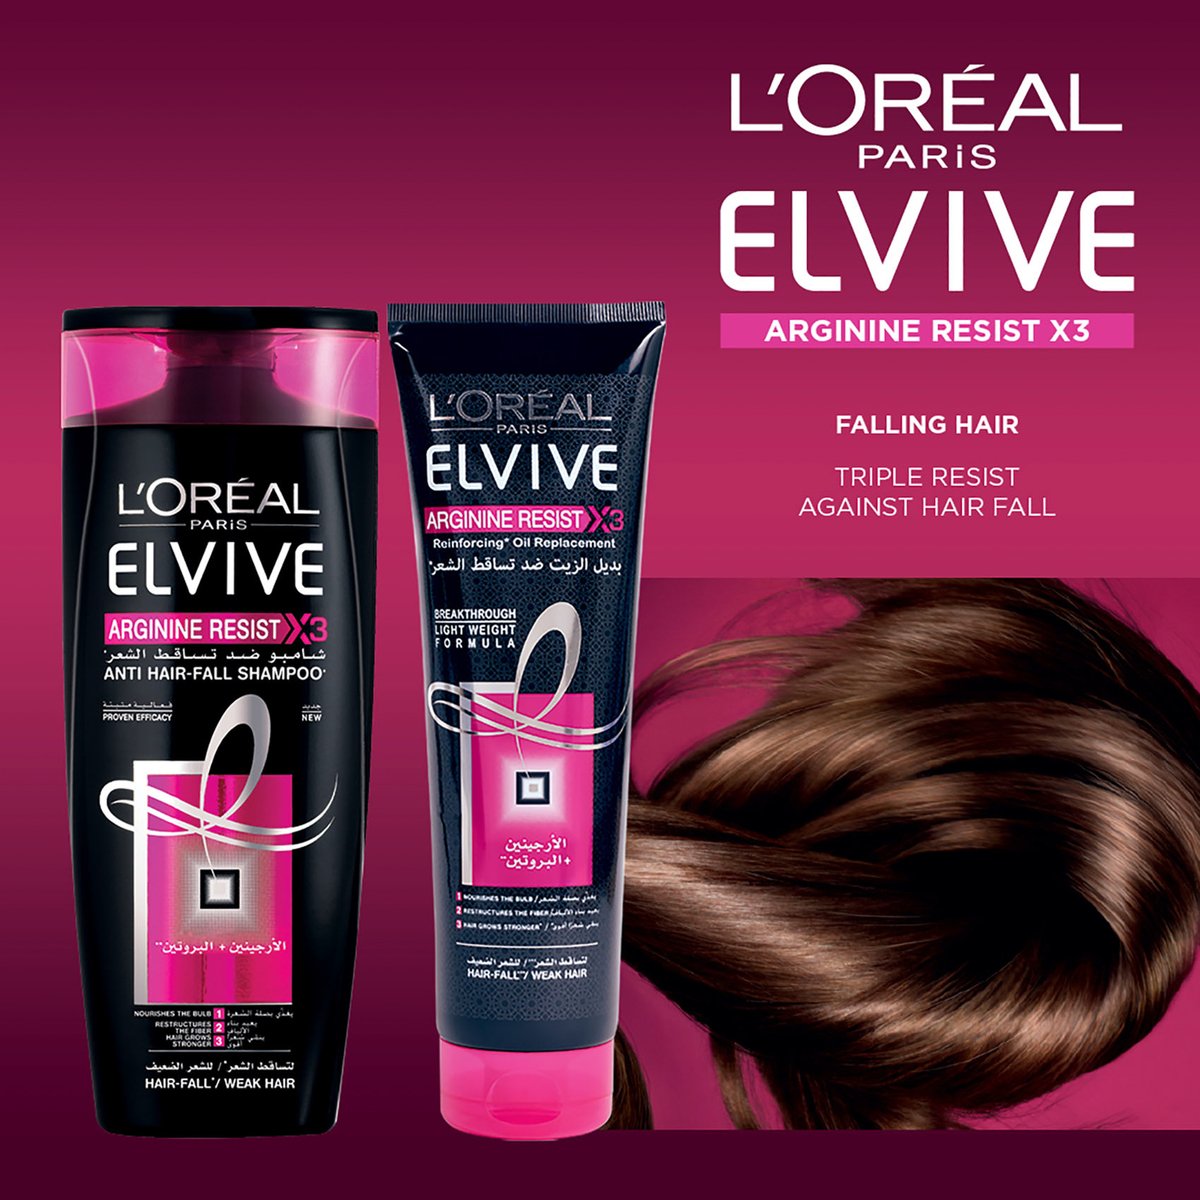 L'Oreal Elvive Arginine Resist Anti Hair Fall Shampoo 200 ml